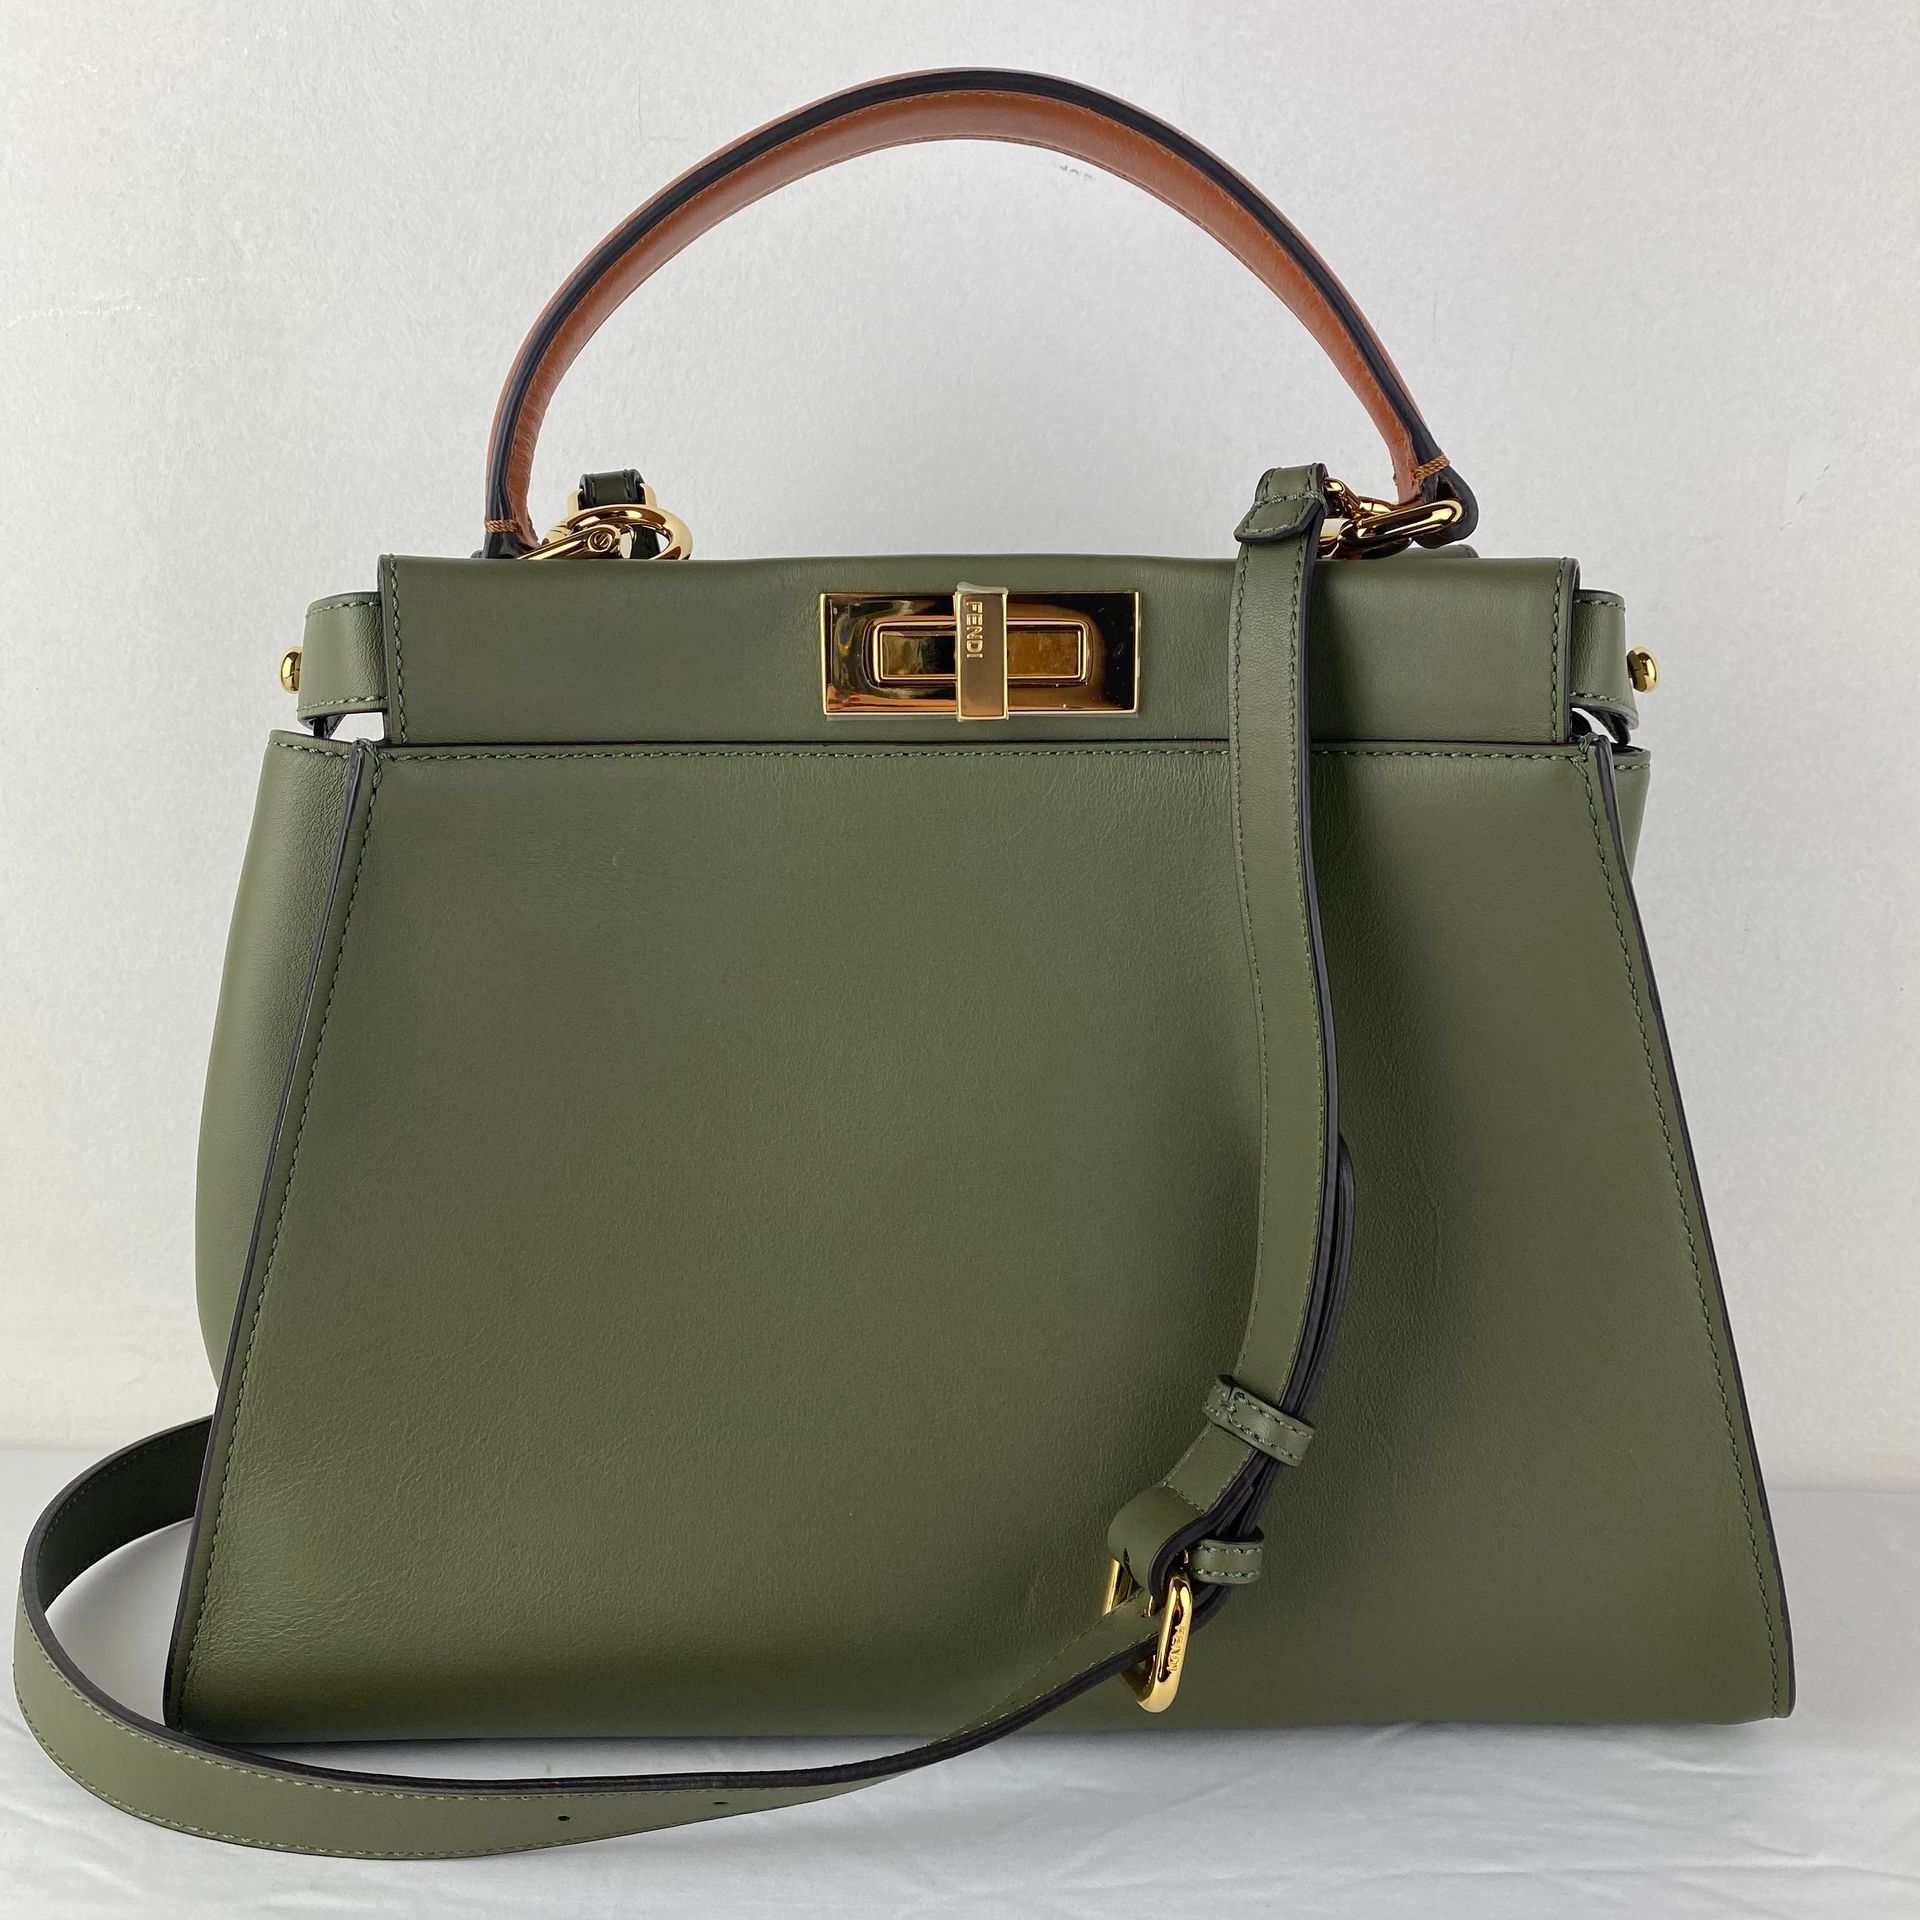 FENDI A handbag FENDI model Peekaboo Regular in green leather with shoulder stra&hellip;